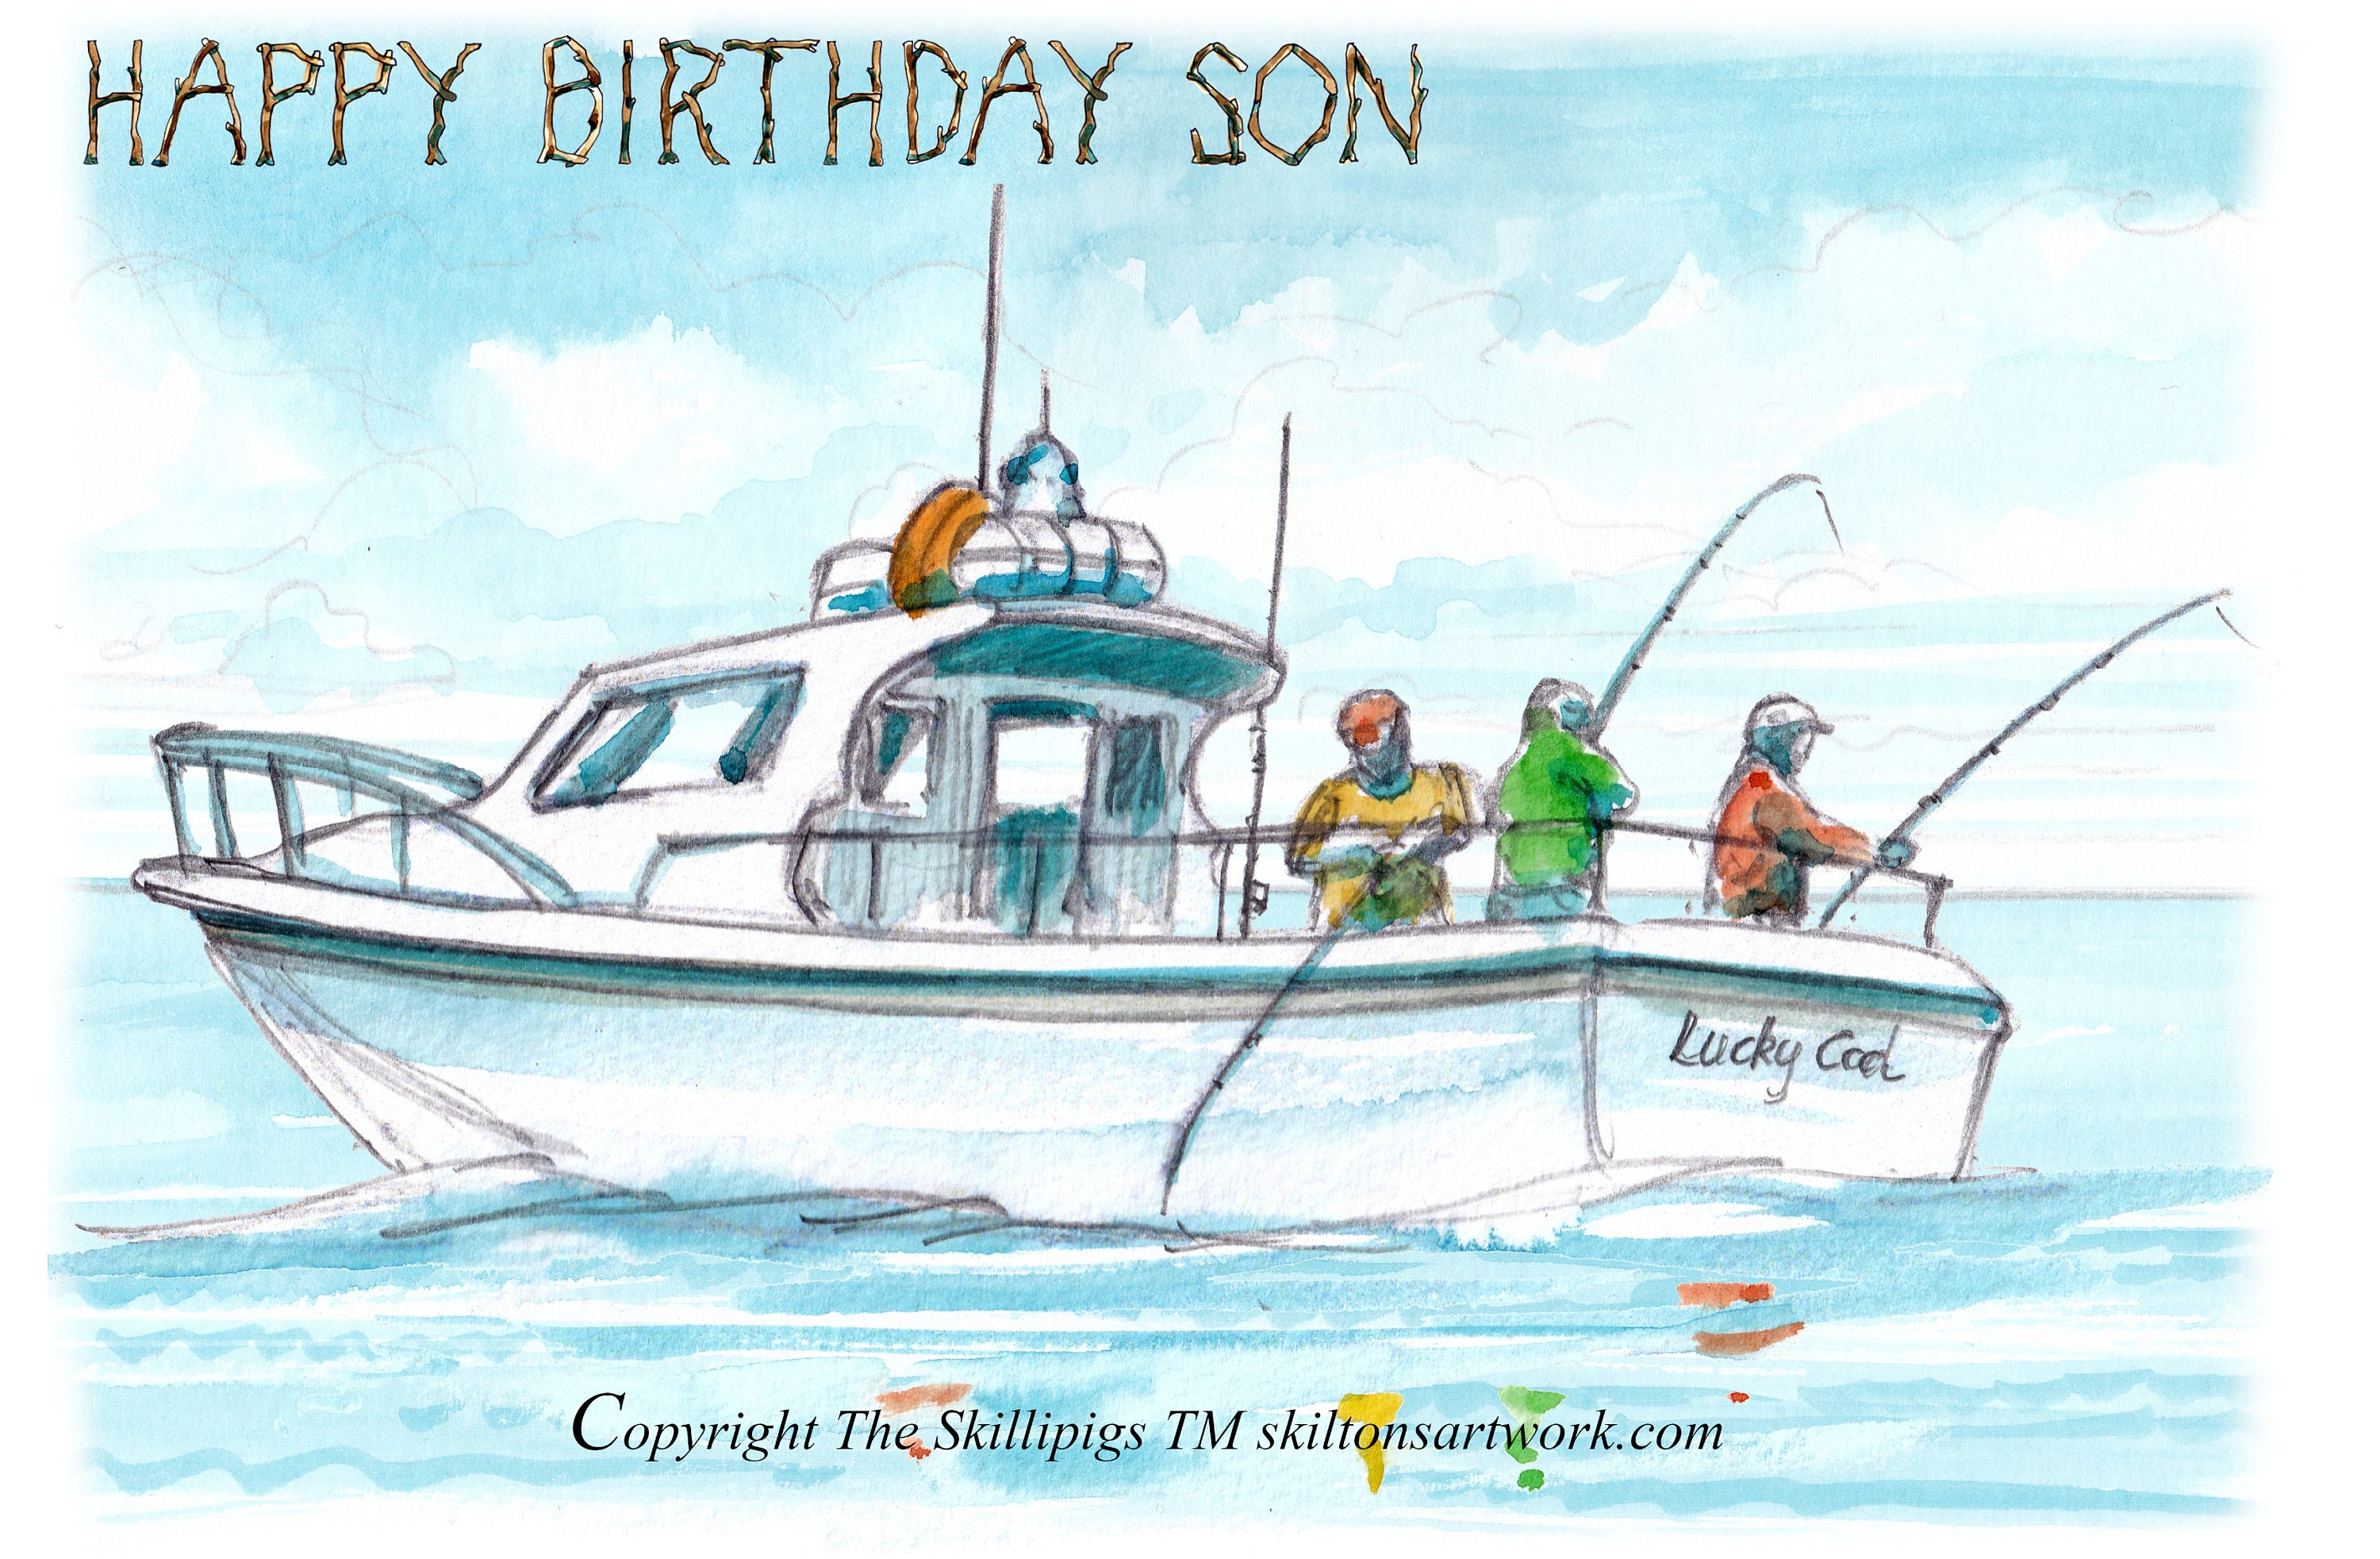  52nd Birthday Fishing, 52 Years Old And Still Kicking